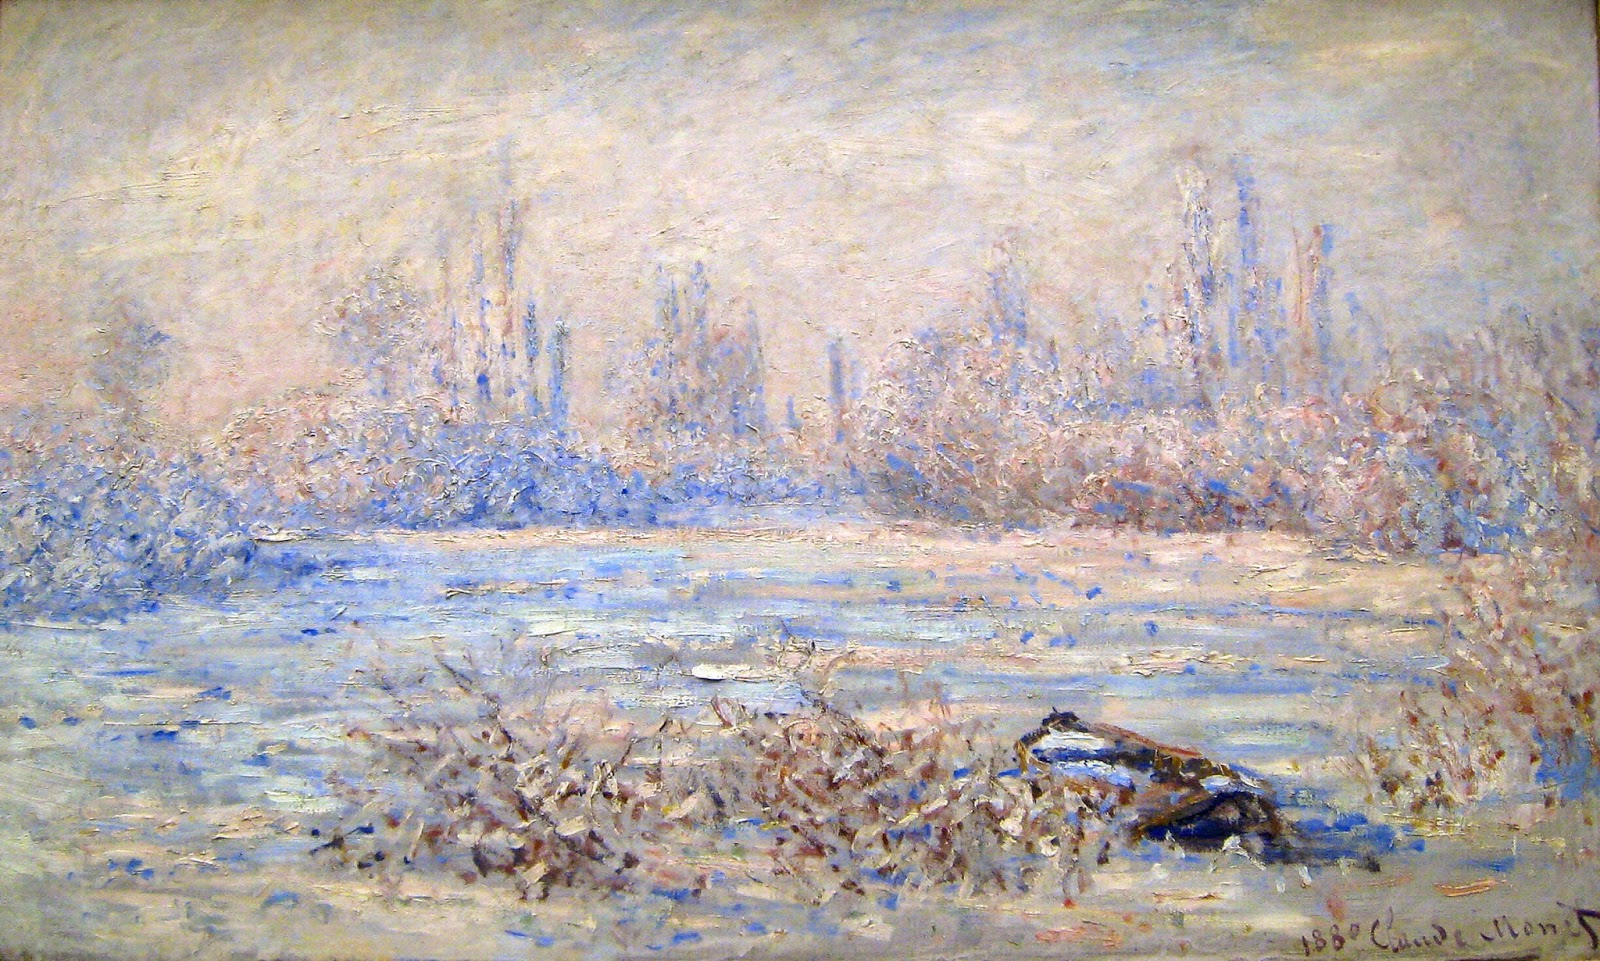 Claude+Monet-1840-1926 (220).jpg